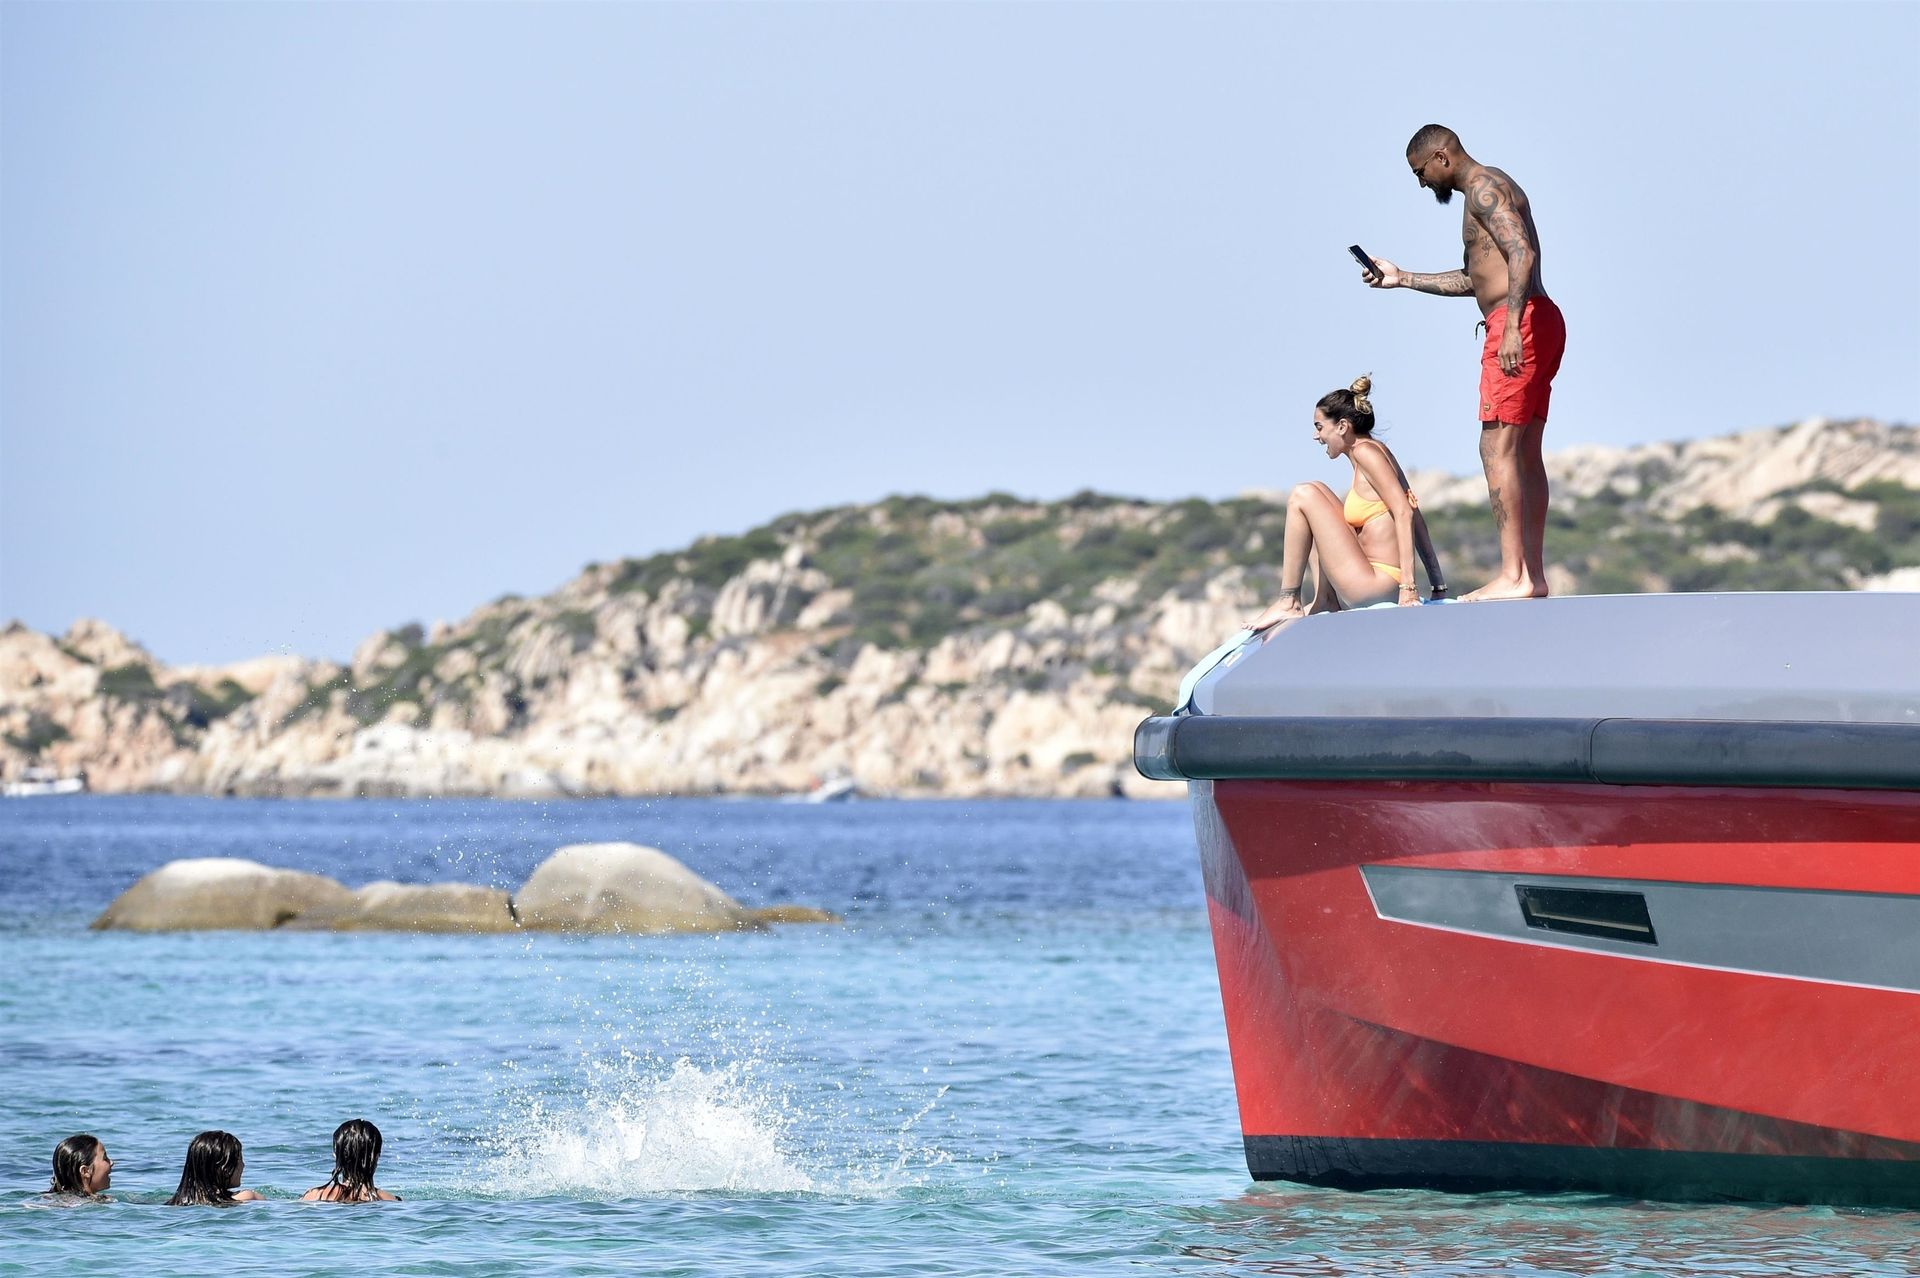 Kevin Prince Boateng & Melissa Satta Enjoy a Holiday in Sardinia (36 Photos)